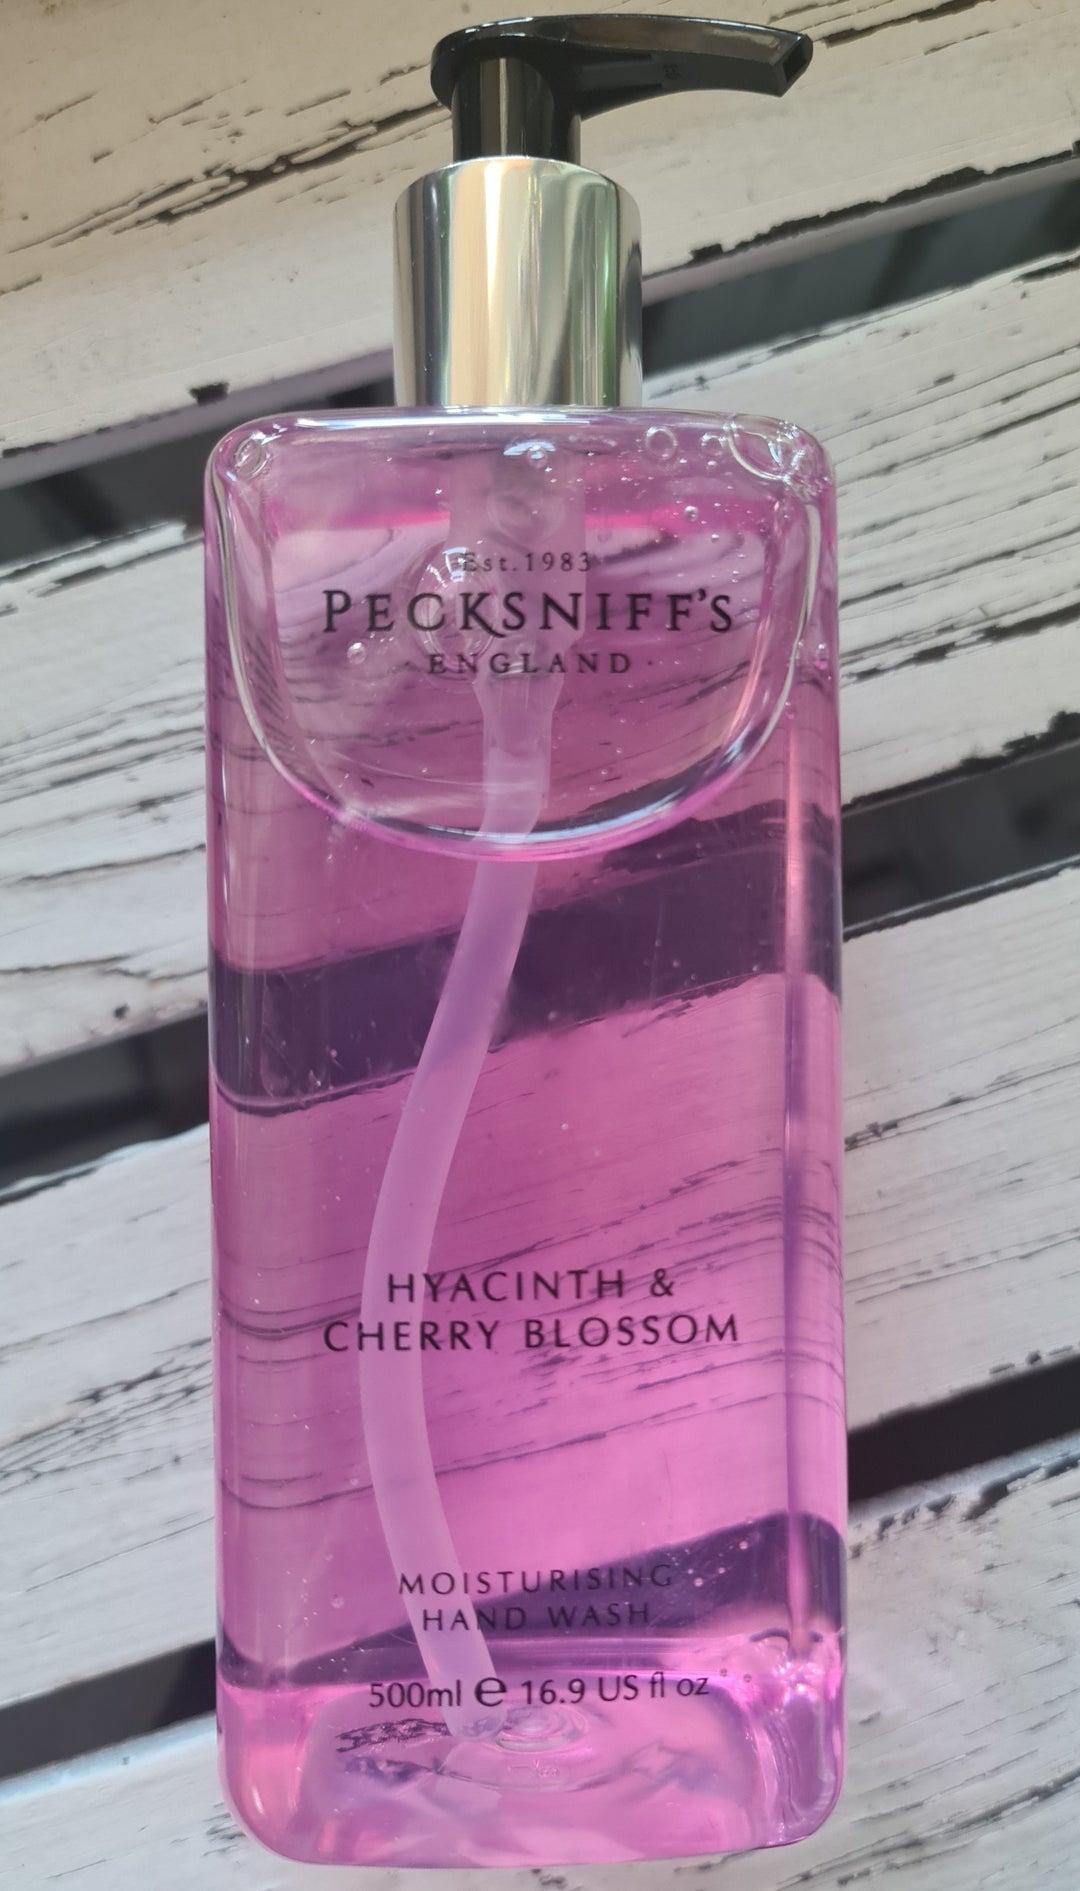 Pecksniff's Hyacinth and Cherry Blossom Luxury Handwash, Flüssigseife 500 ml - British Moments